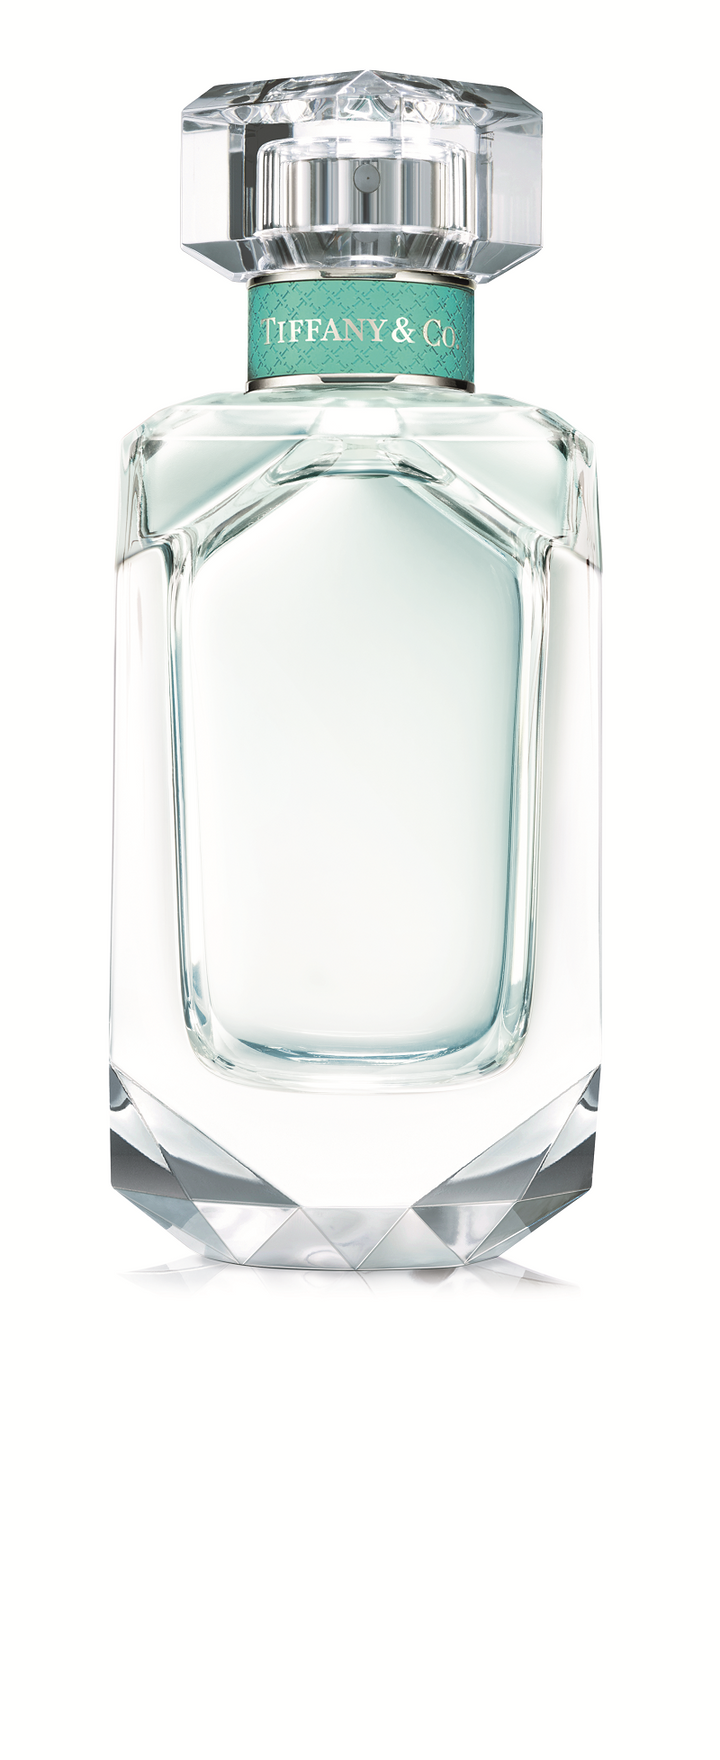 Tiffany & Co. - Eau de Parfum - Profumeria Lauda